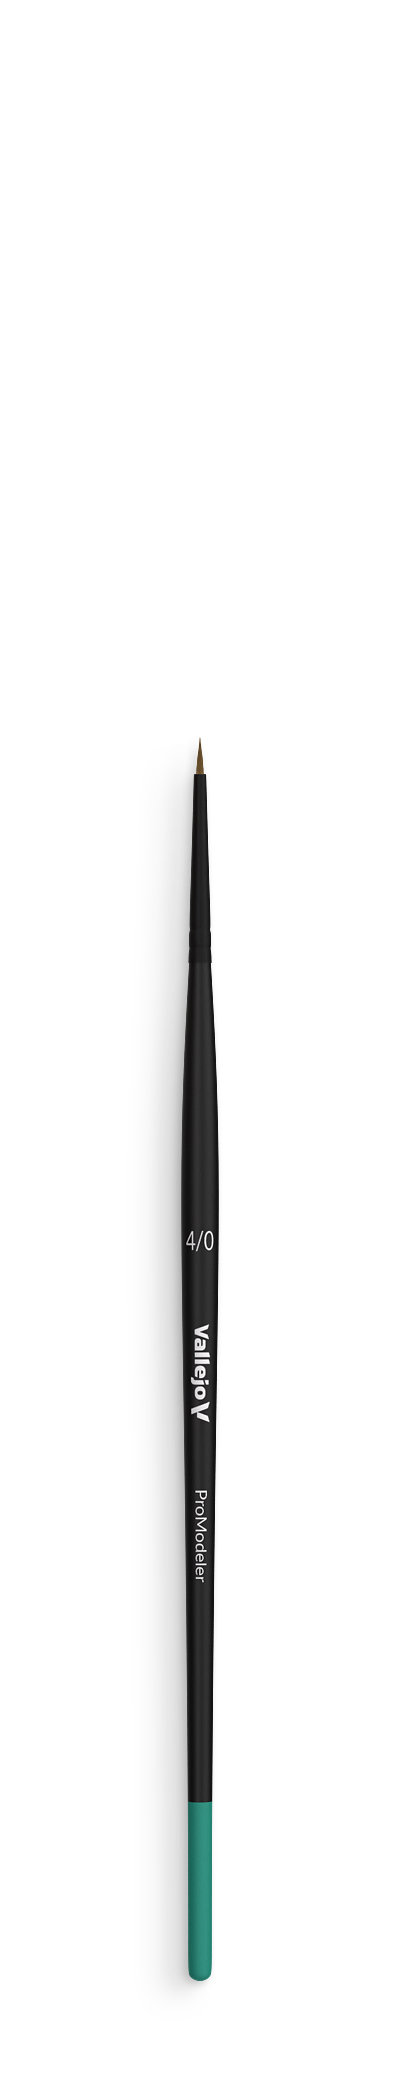 B01040 - Pro Modeler - NATURAL HAIR - ROUND BRUSH NO. 4/0 - Vallejo Pro Modeler